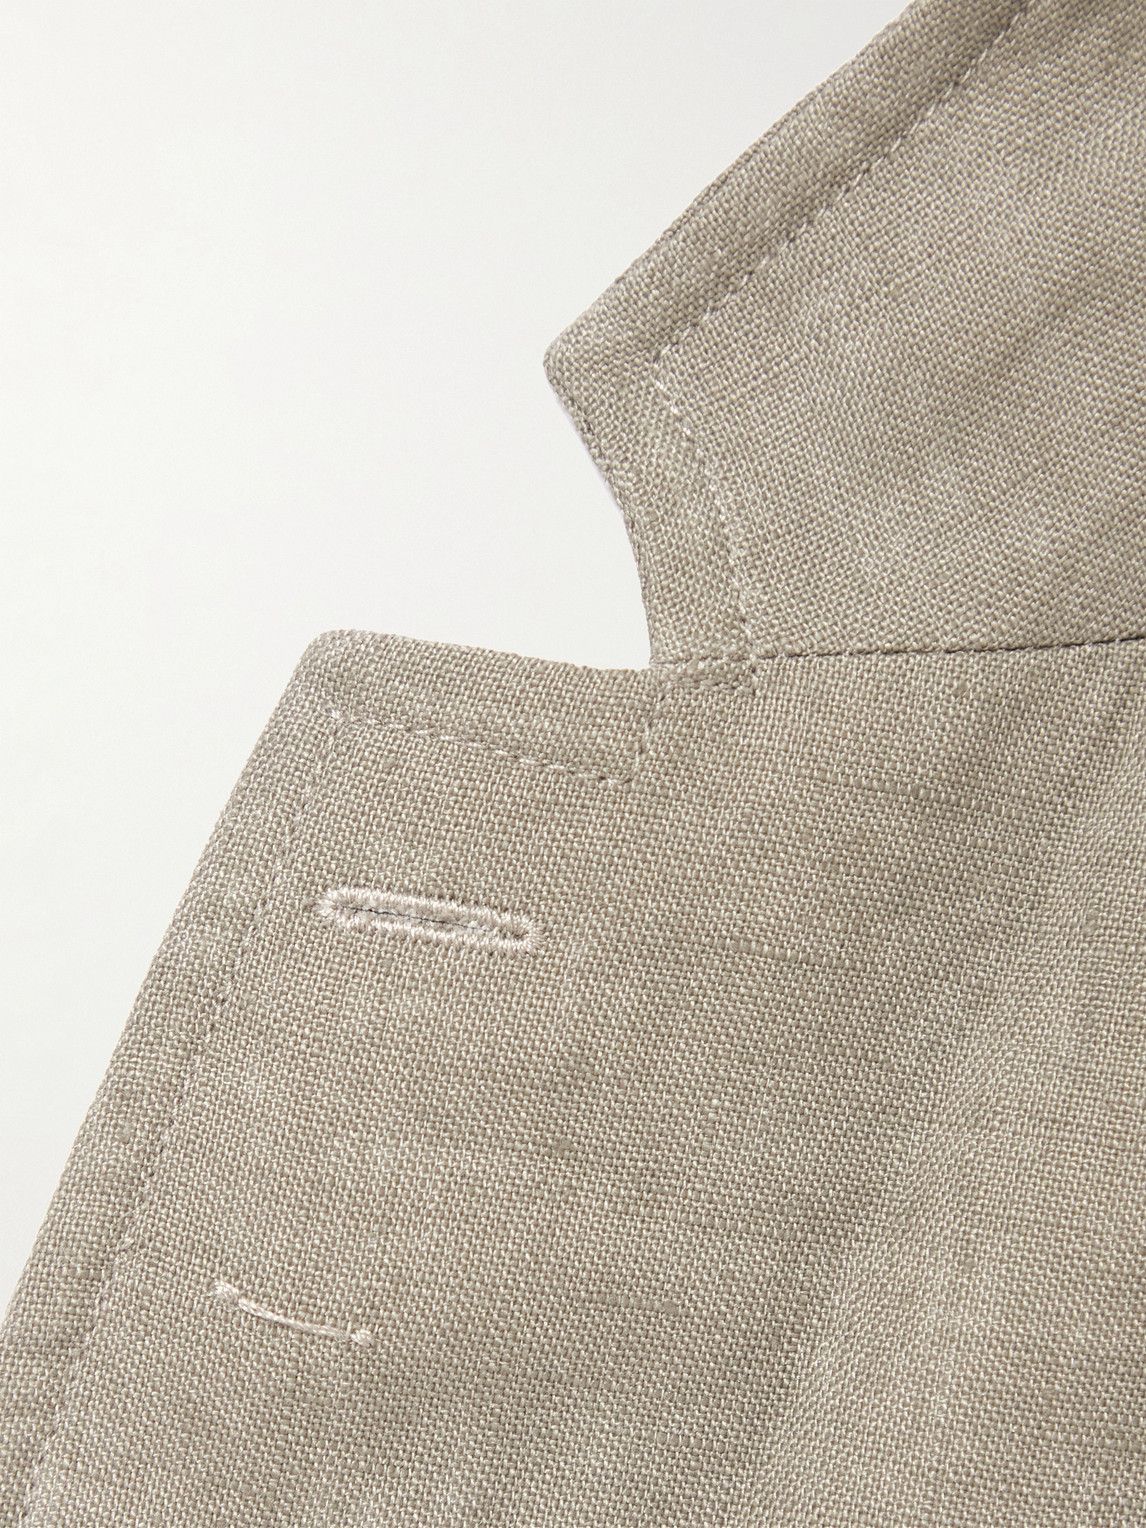 Oliver Spencer - Fairway Unstructured Linen Suit Jacket - Gray